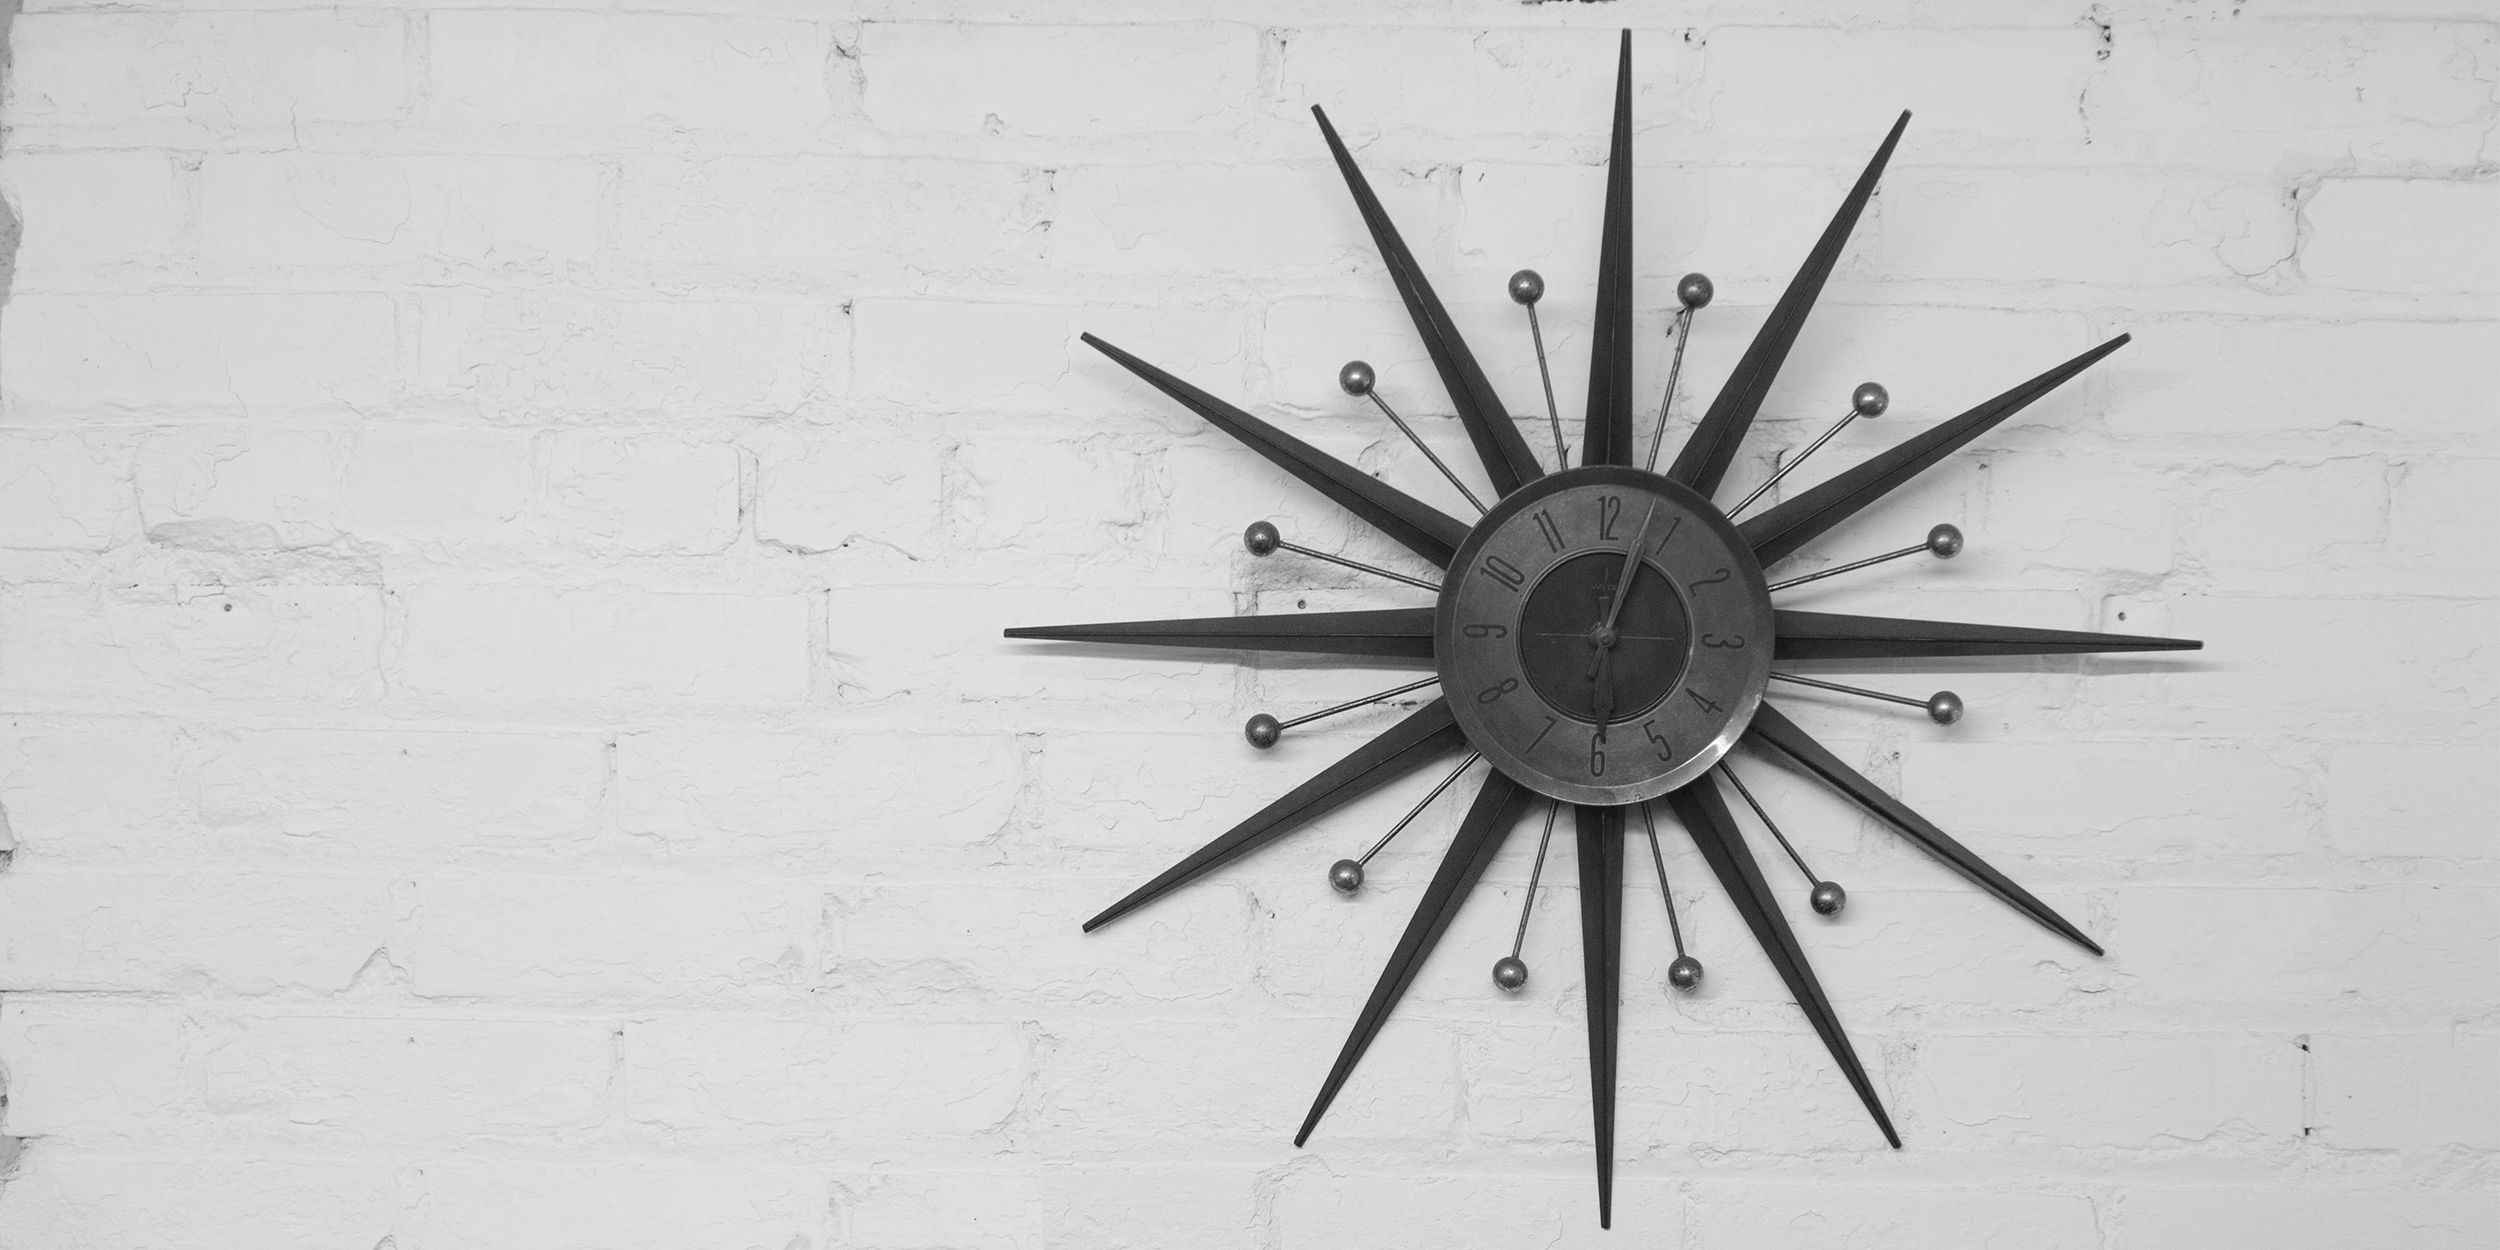 George Nelson Clock